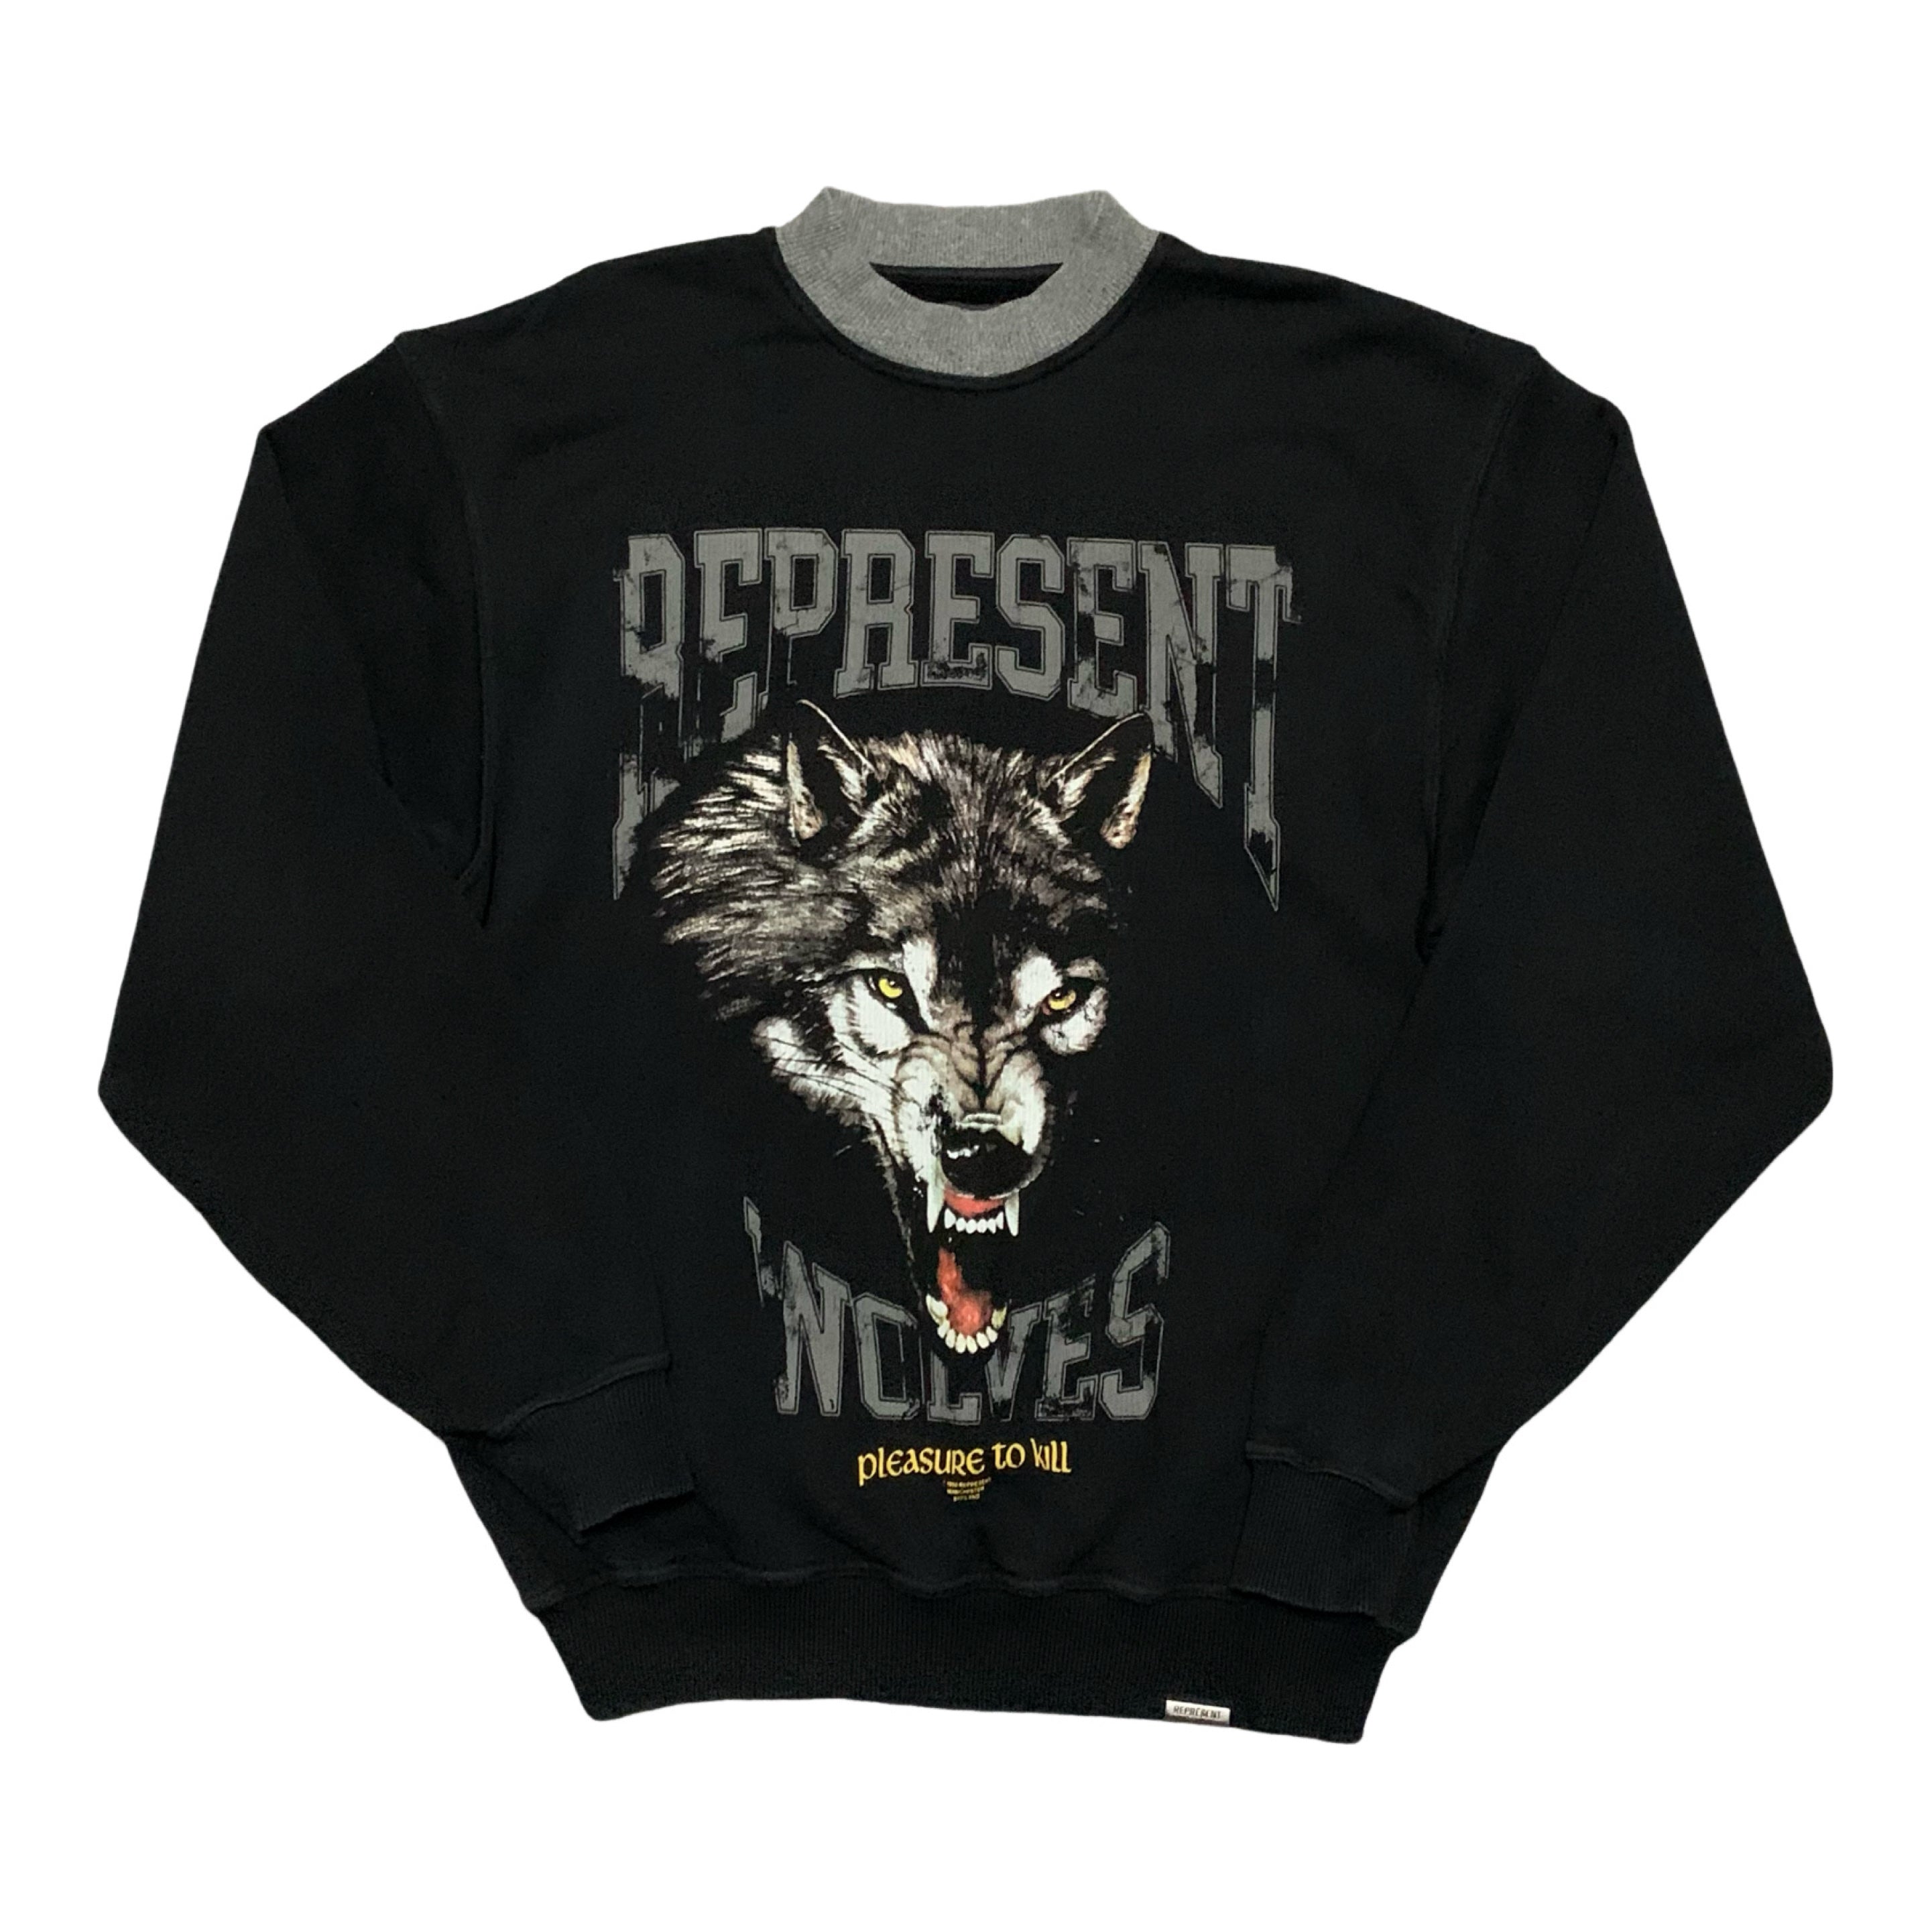 Represent XS Pleasure To Kill Black Sweater Sweatshirt